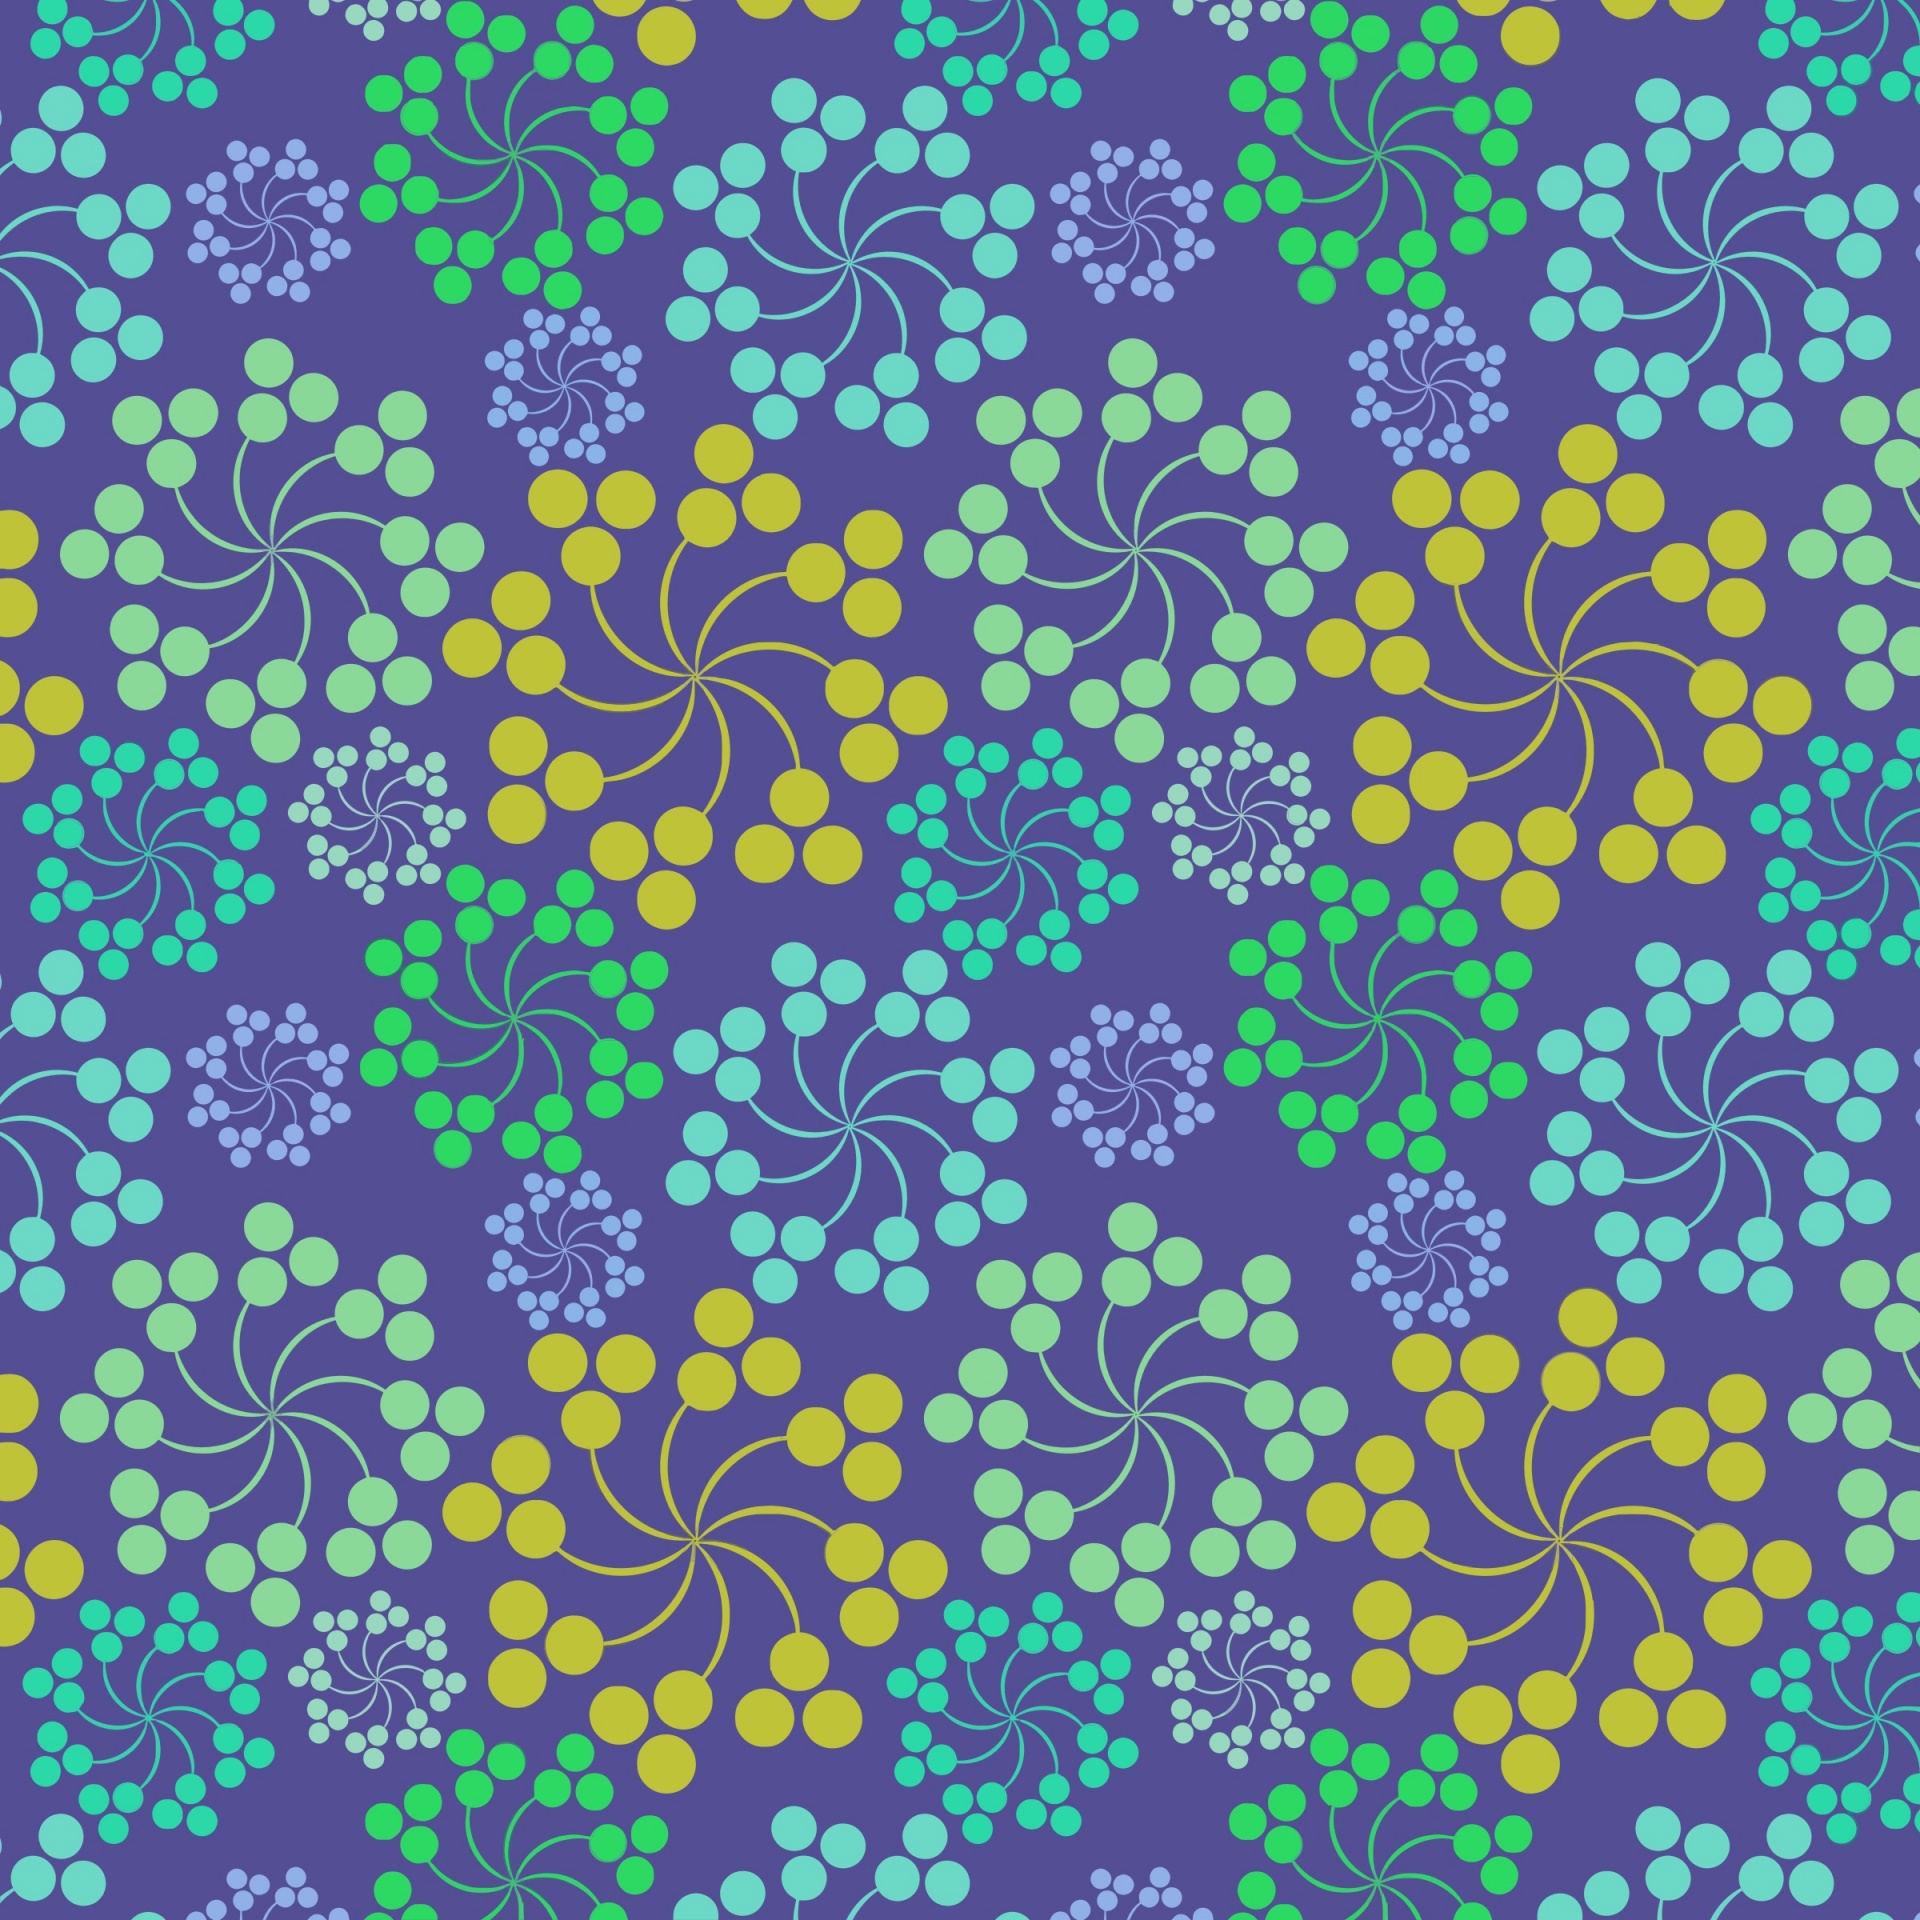 sparkles pattern colors free photo